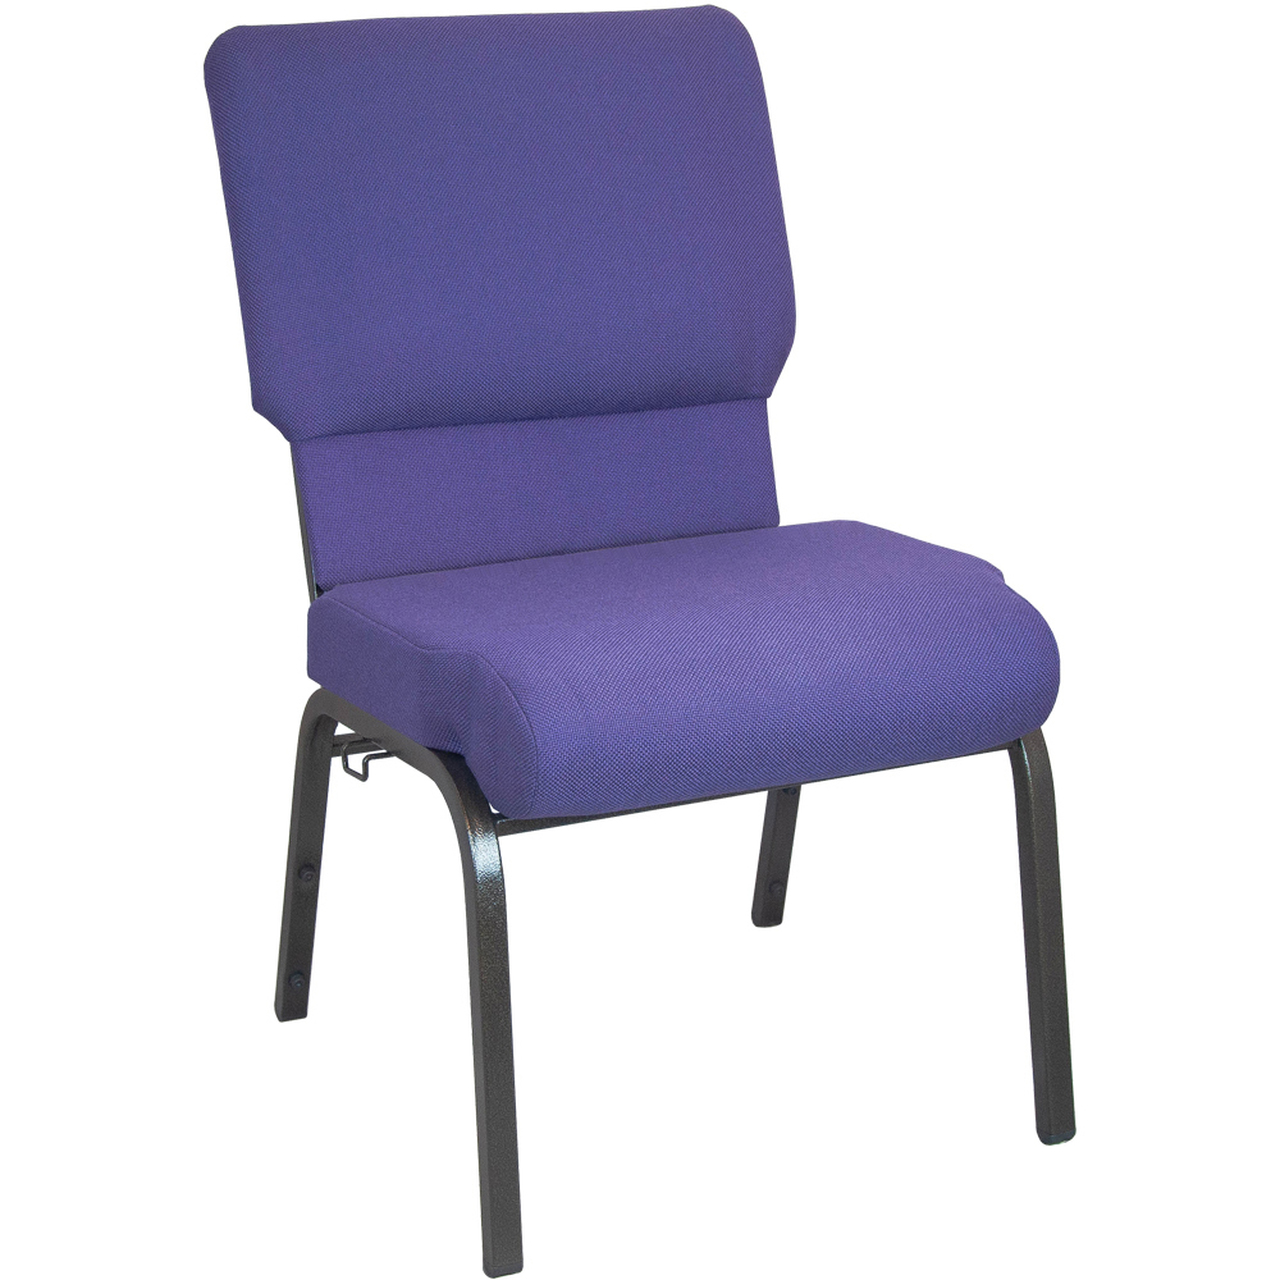 Purple Advantage Church Chairs NOW on Sale - PCHT-115 Eggplant